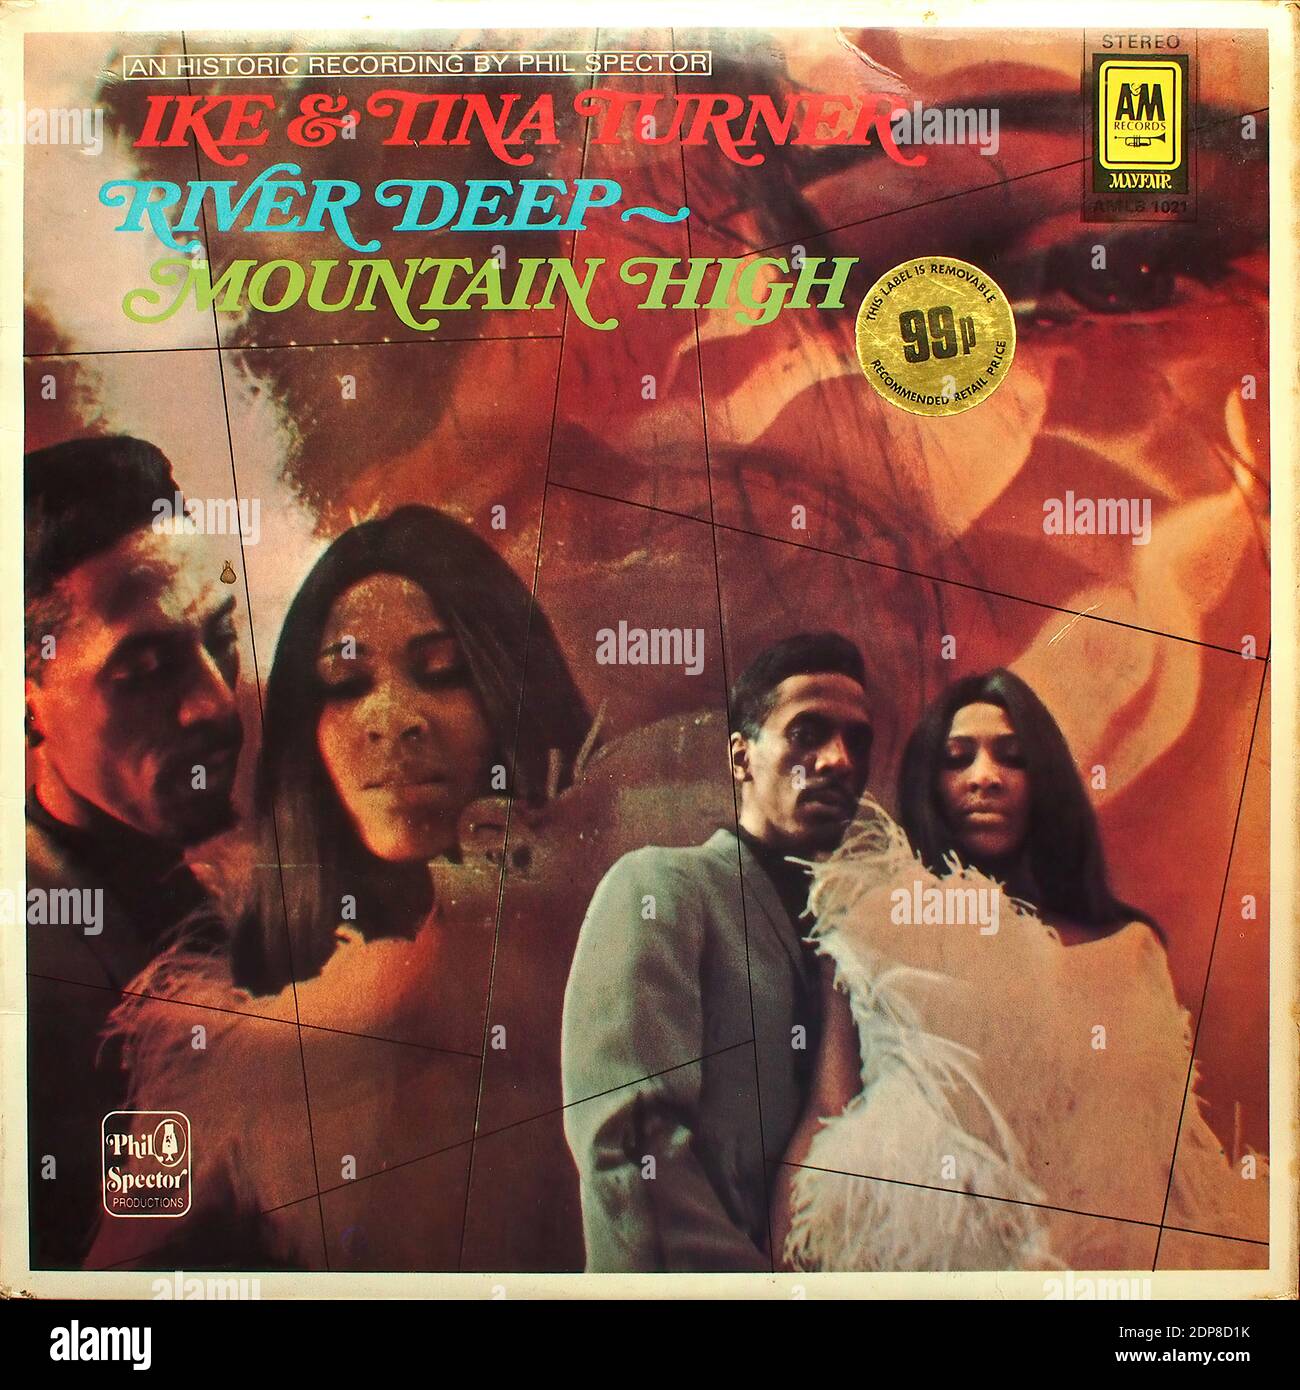 IKE & Tina Turner - River Deep-Mountain High - A Historische Aufnahme von Phil Spector - A&M Records Mayfair AMLB 1021 - Vintage Vinyl Album Cover Stockfoto